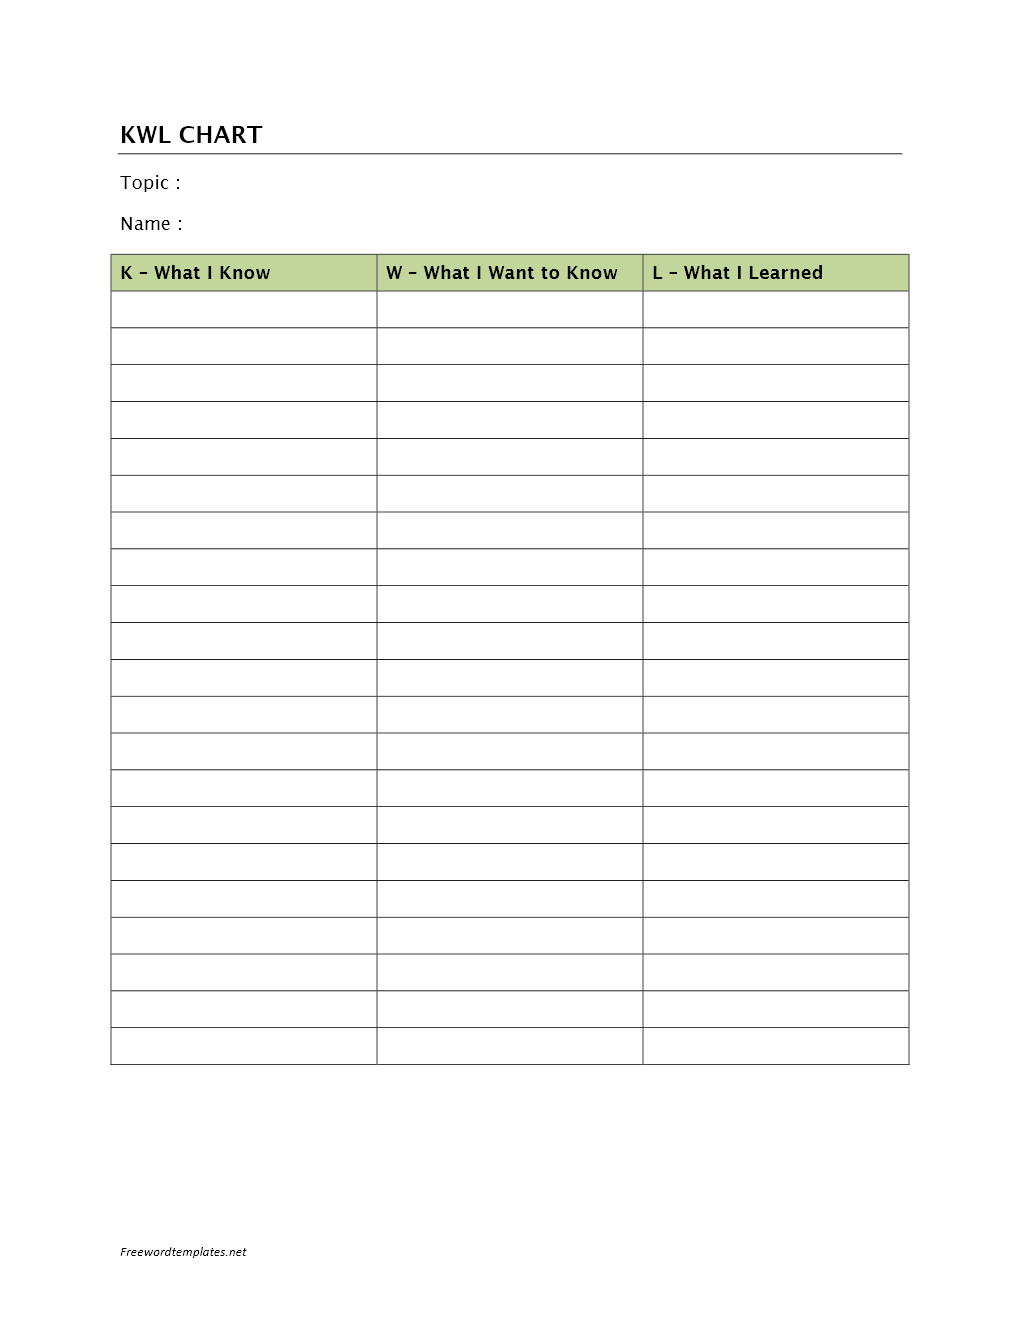 Kwl Chart Template Word | Sample Customer Service Resume Within Kwl Chart Template Word Document